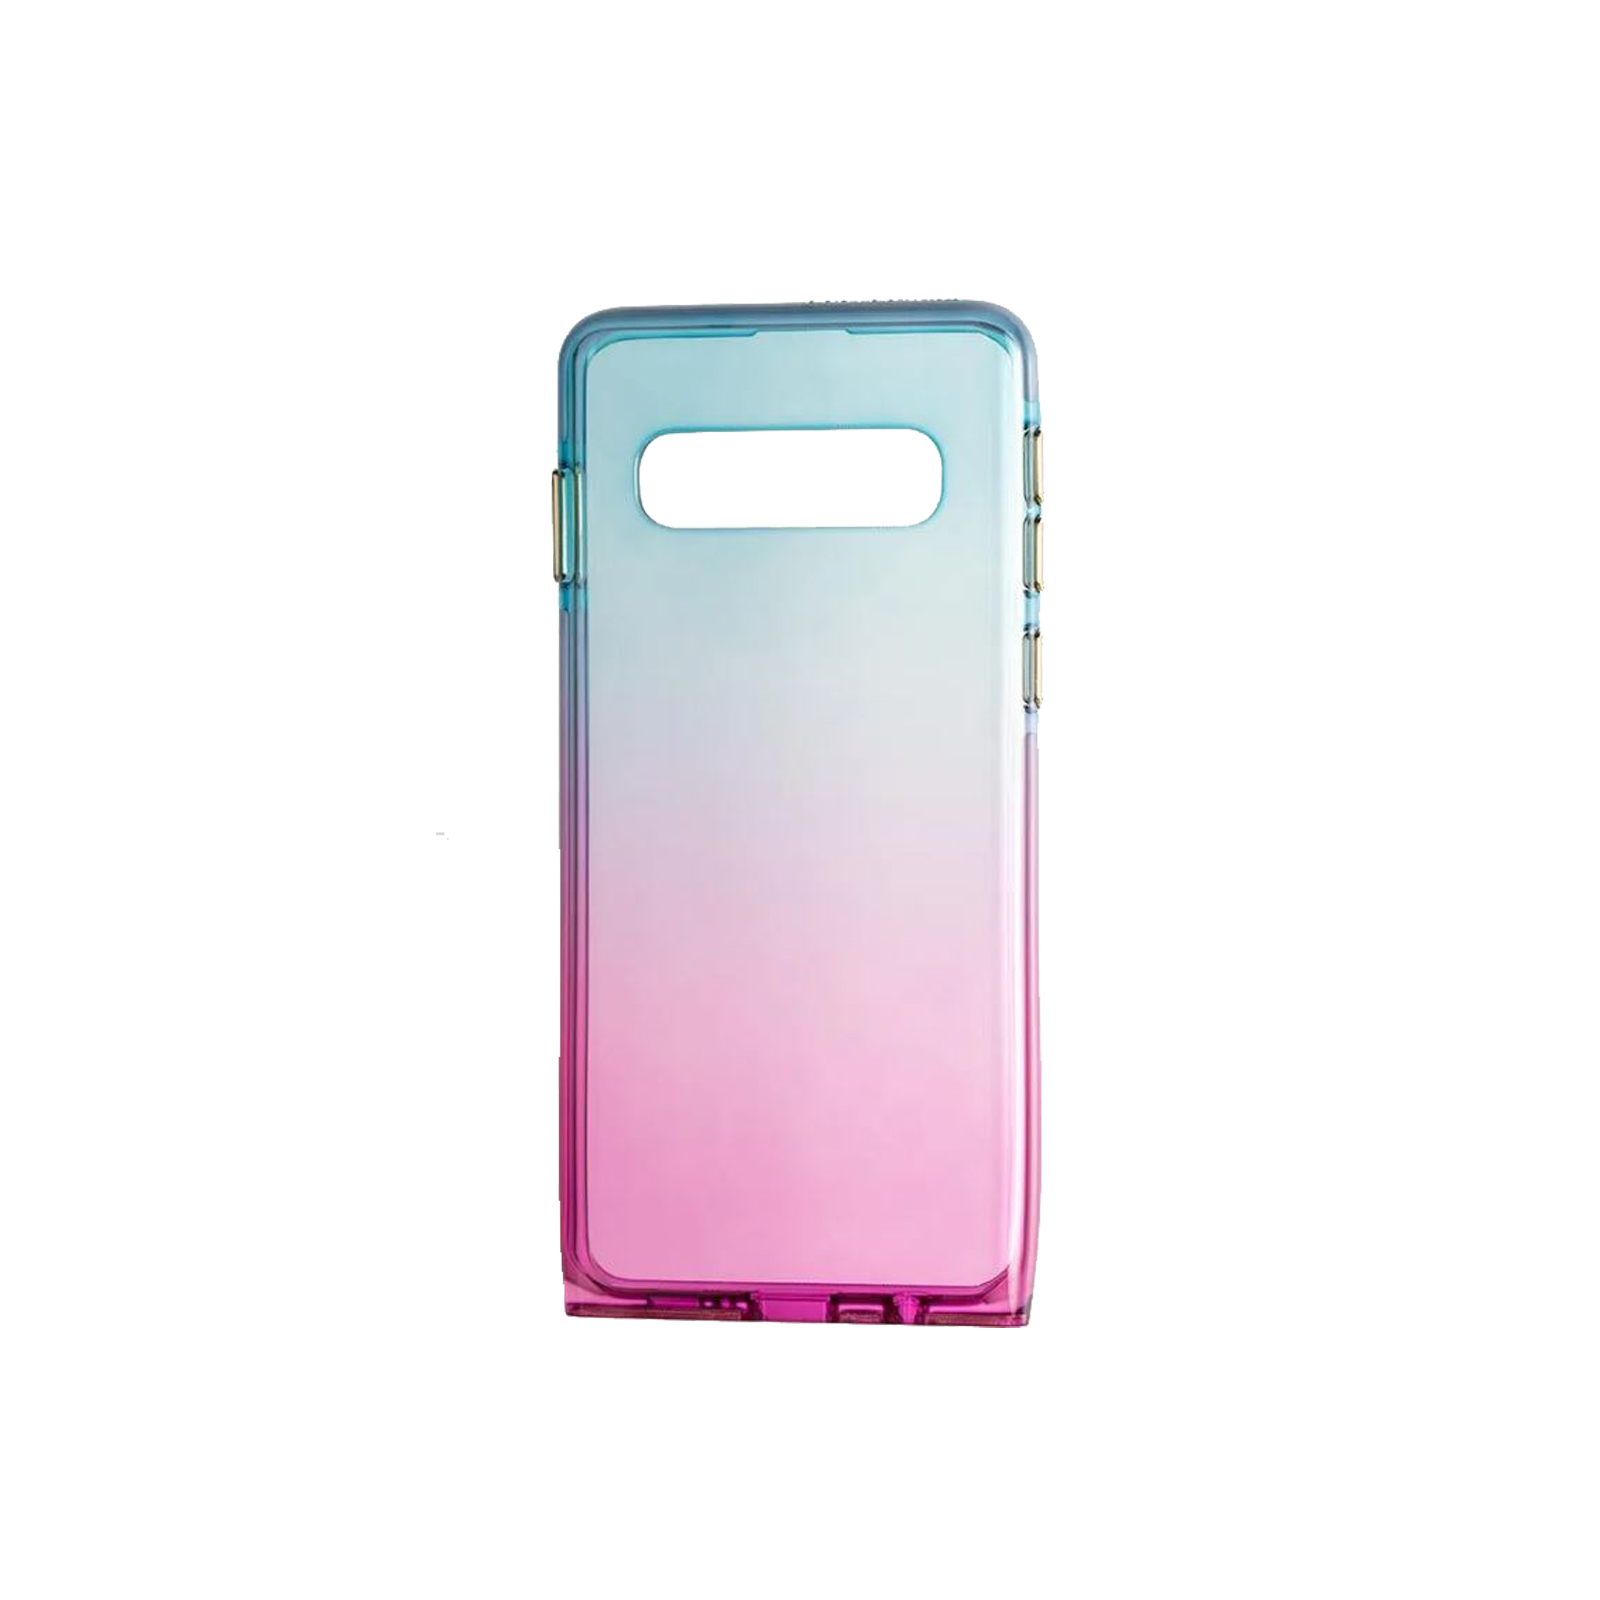 Harmony Samsung Galaxy S10e Blue / Violet Case Brand New